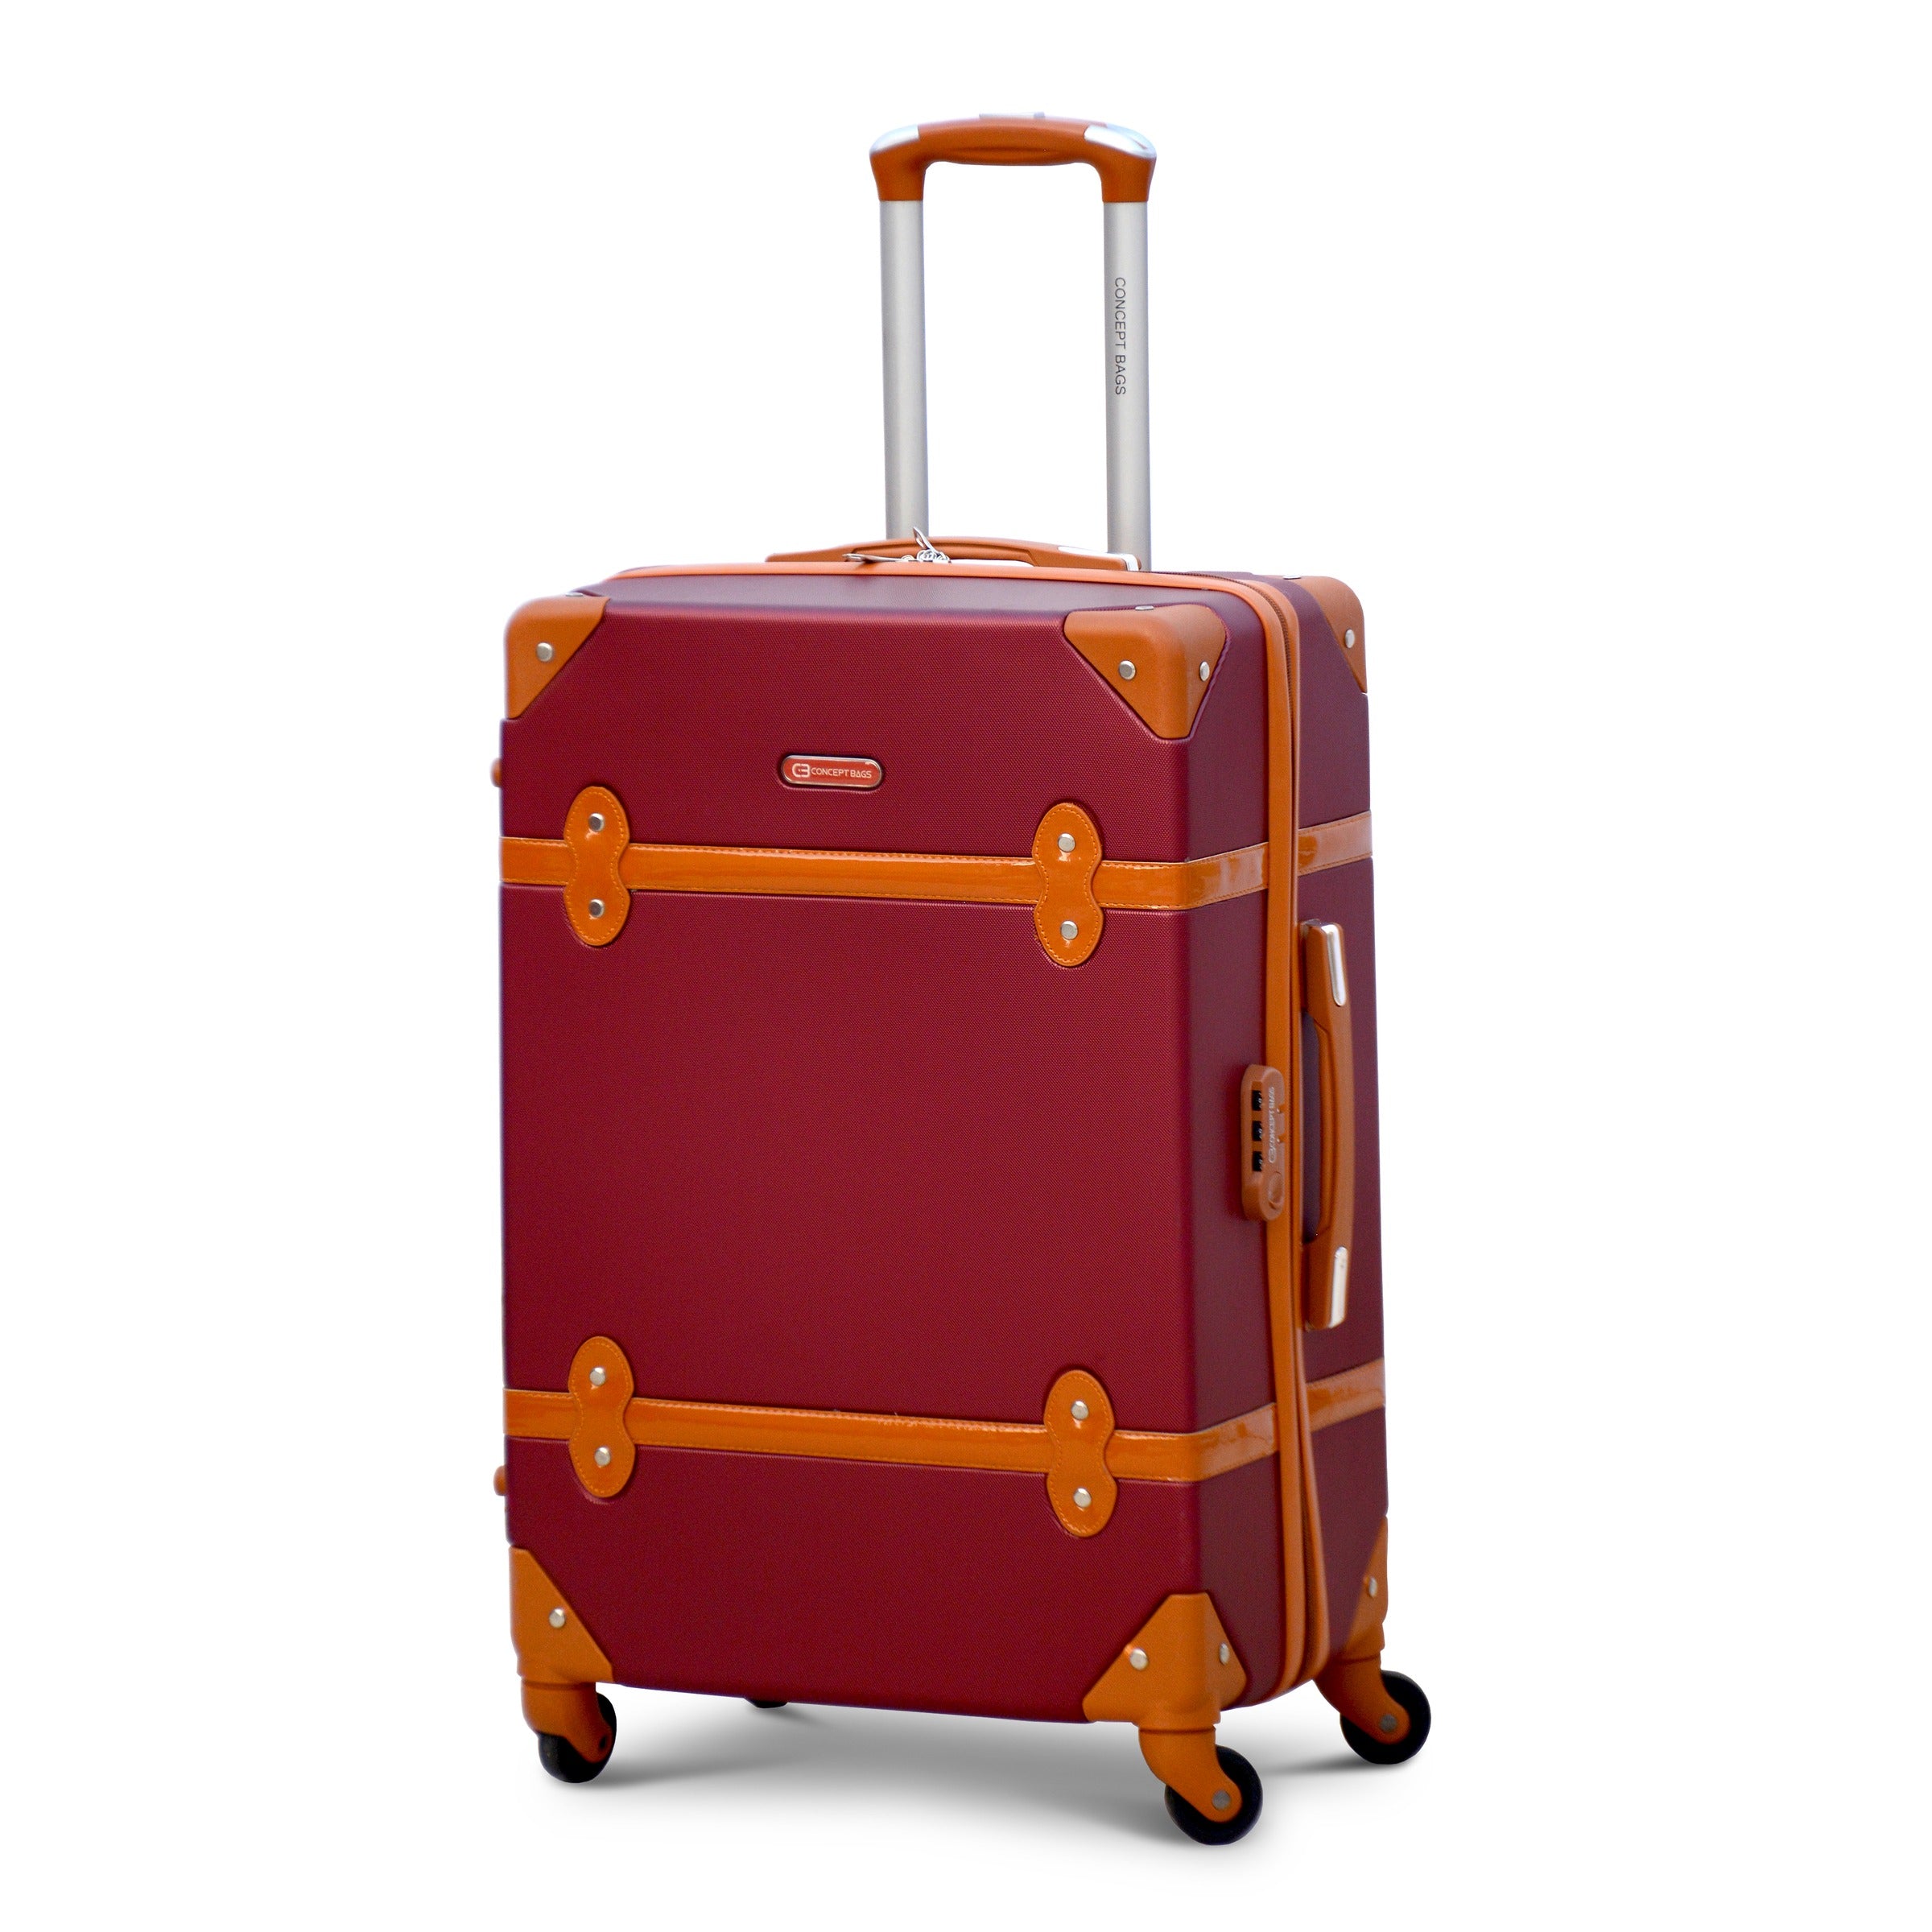 Corner Guard Lightweight ABS Luggage | Hard Case Trolley Bag | 28 Inches | 2 Year Warranty | Burgundy Colour